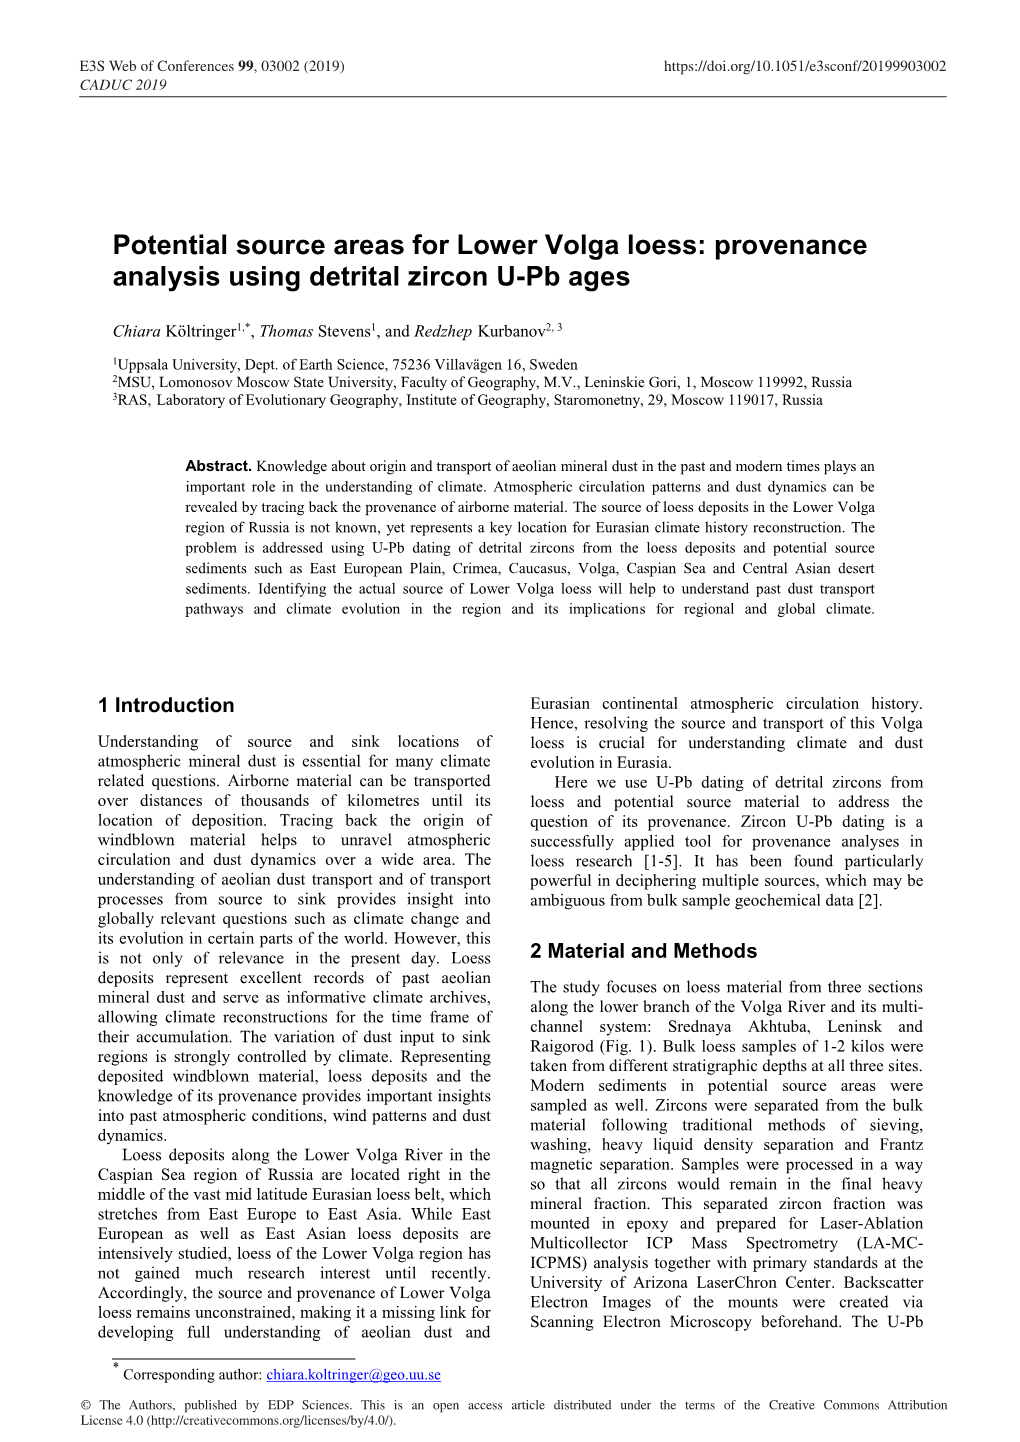 Provenance Analysis Using Detrital Zircon U-Pb Ages